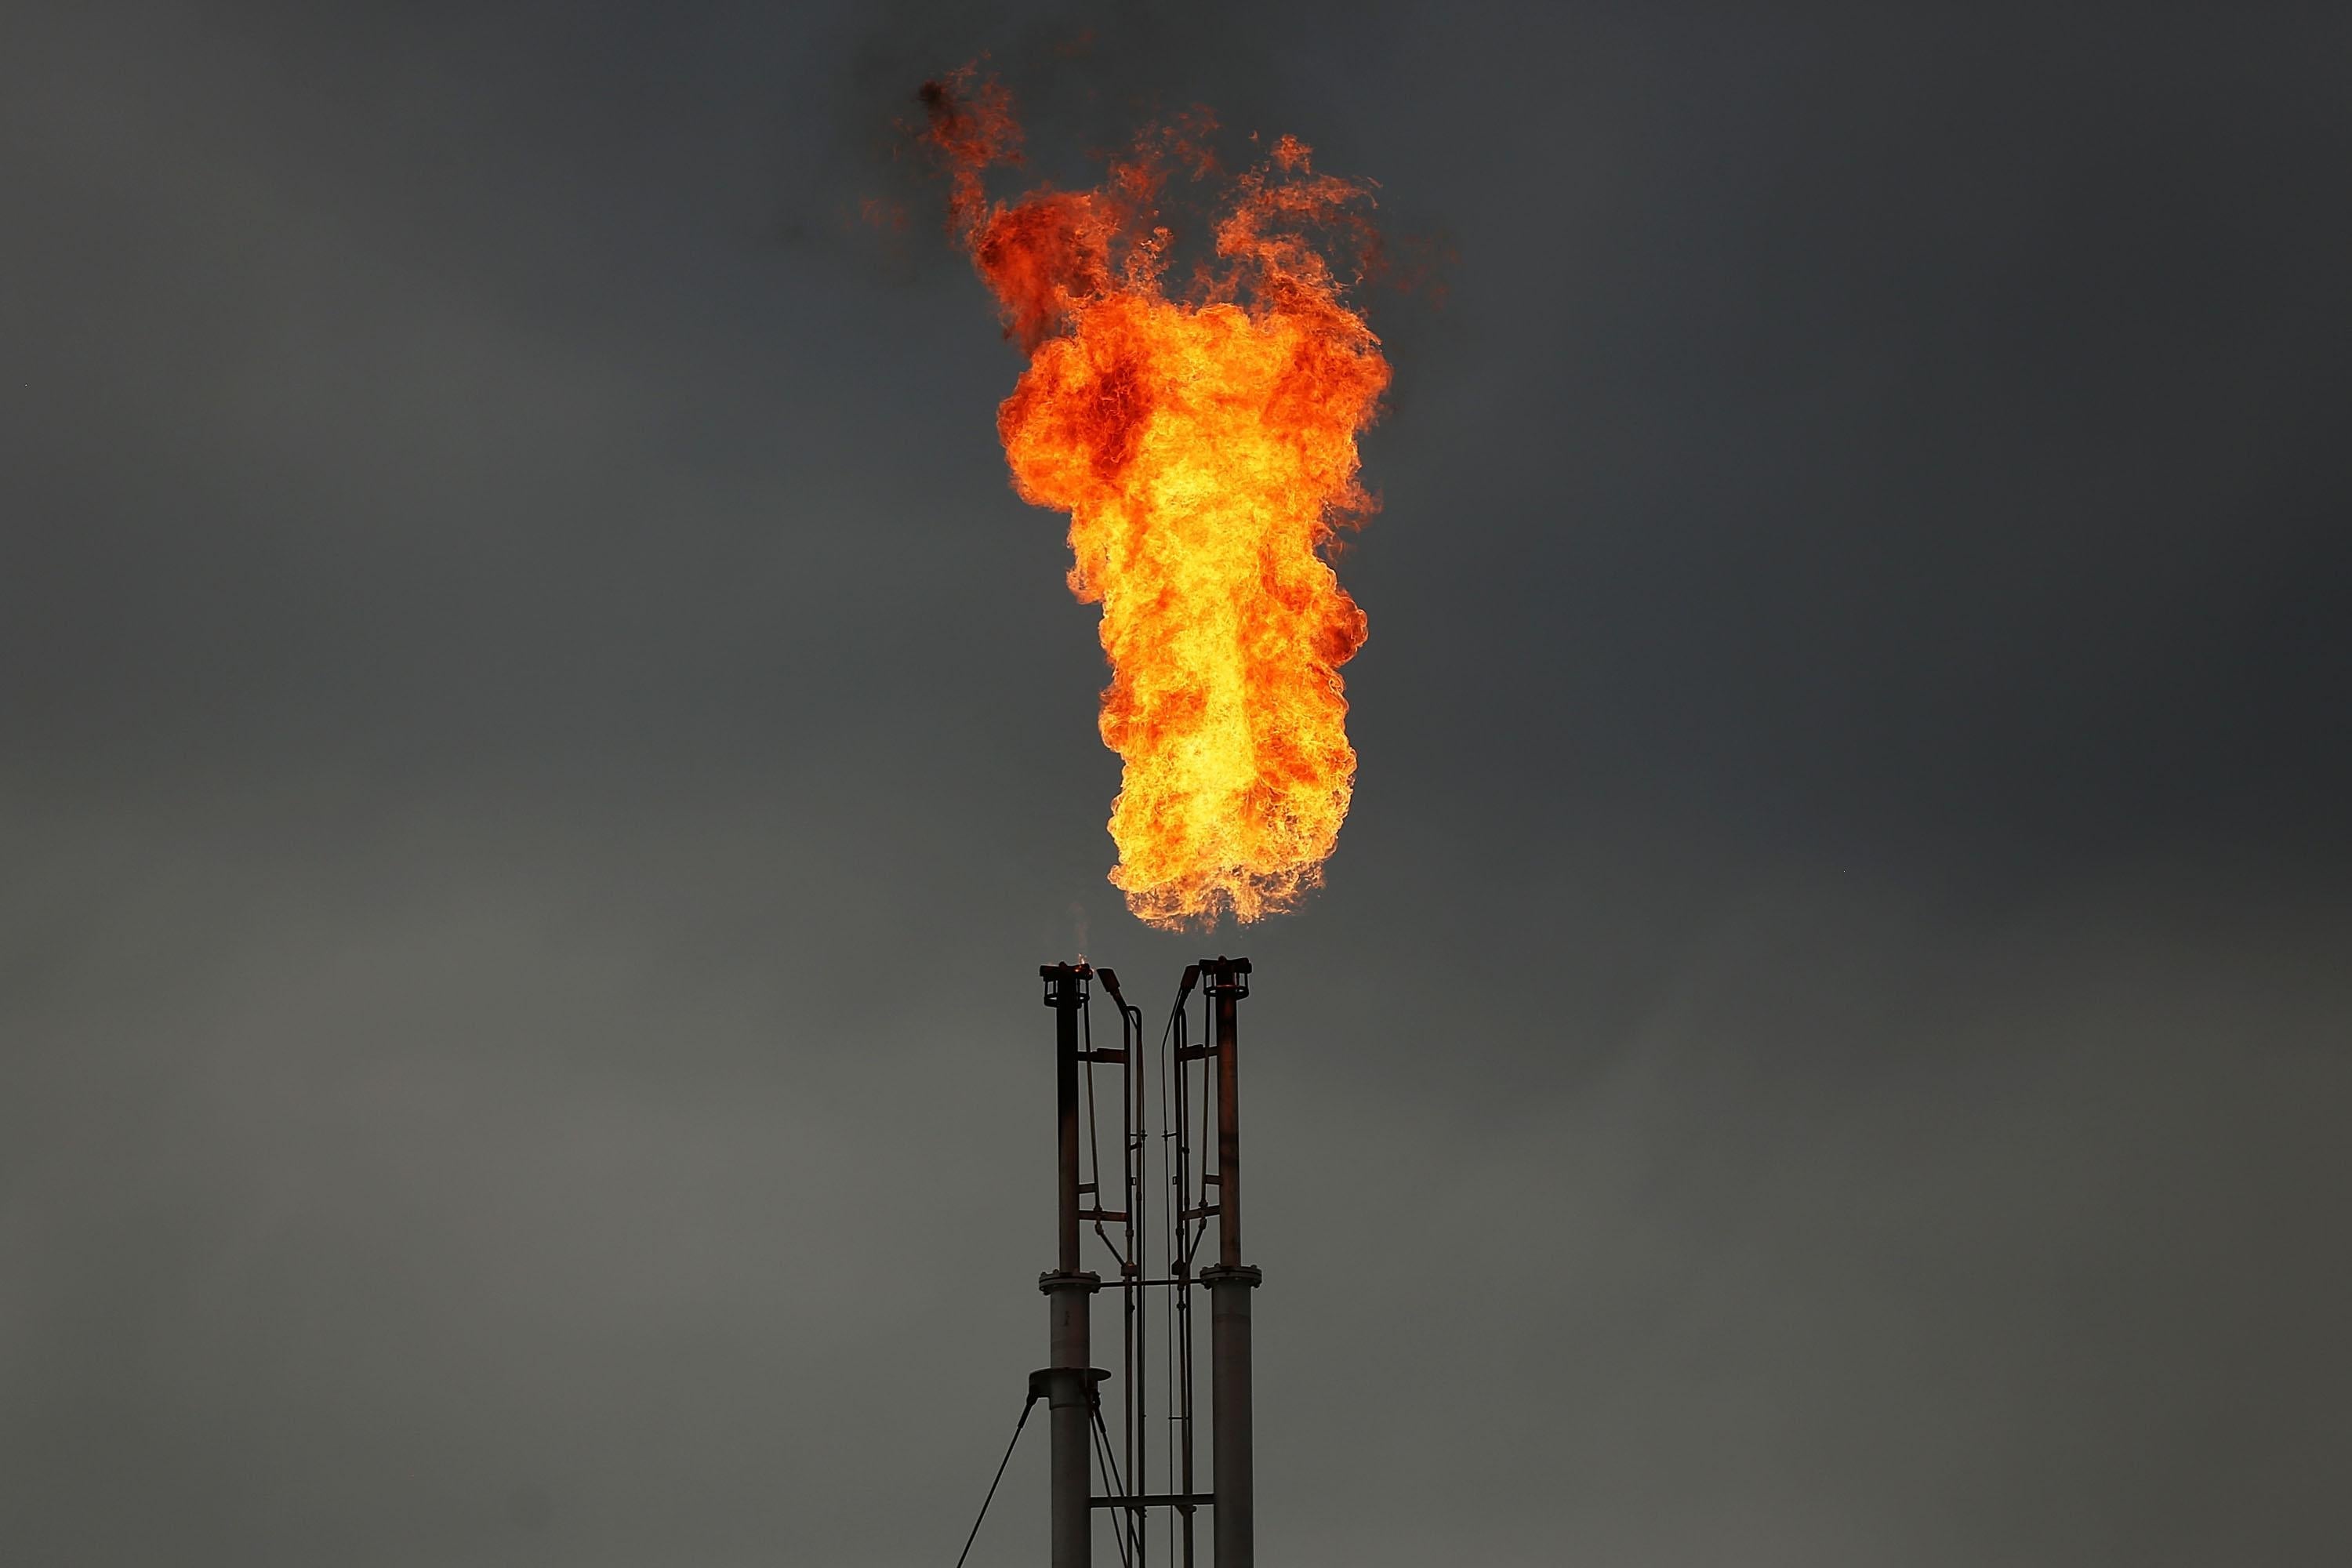 A natural gas plant shoots out flames.